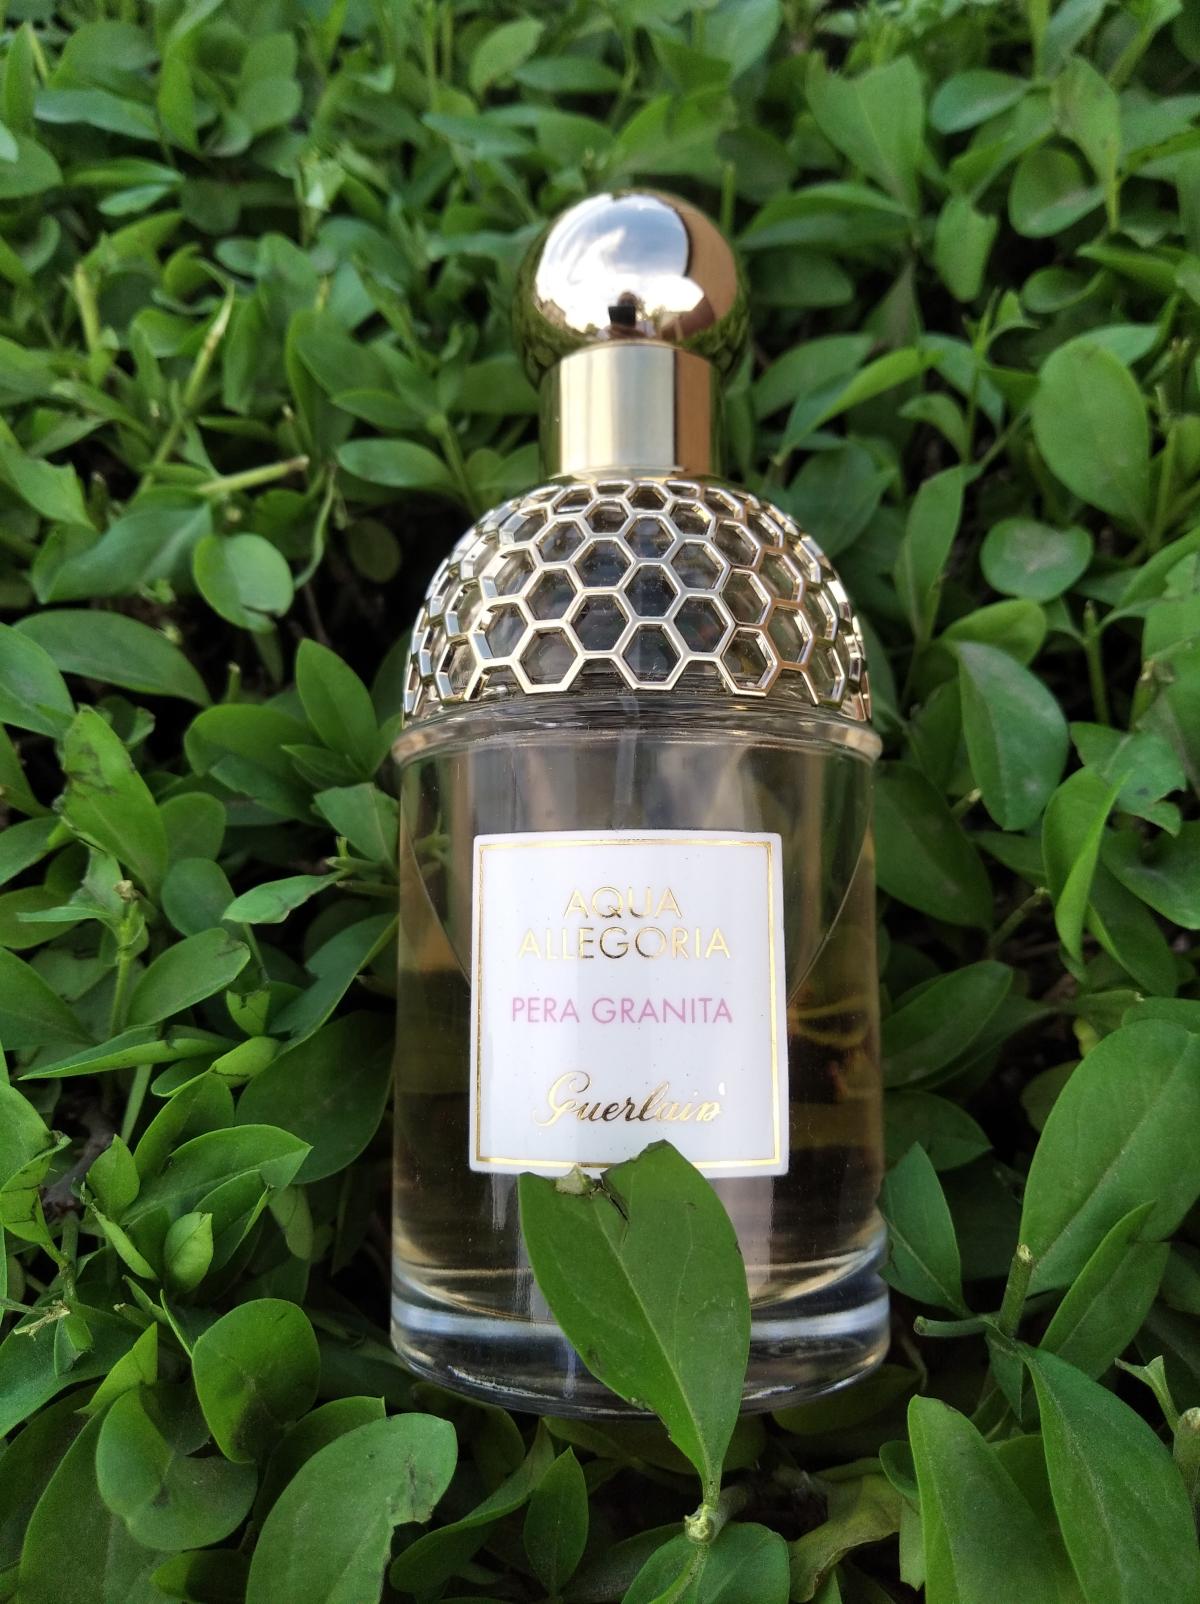 Aqua Allegoria Pera Granita Guerlain perfume - a fragrance for women 2016